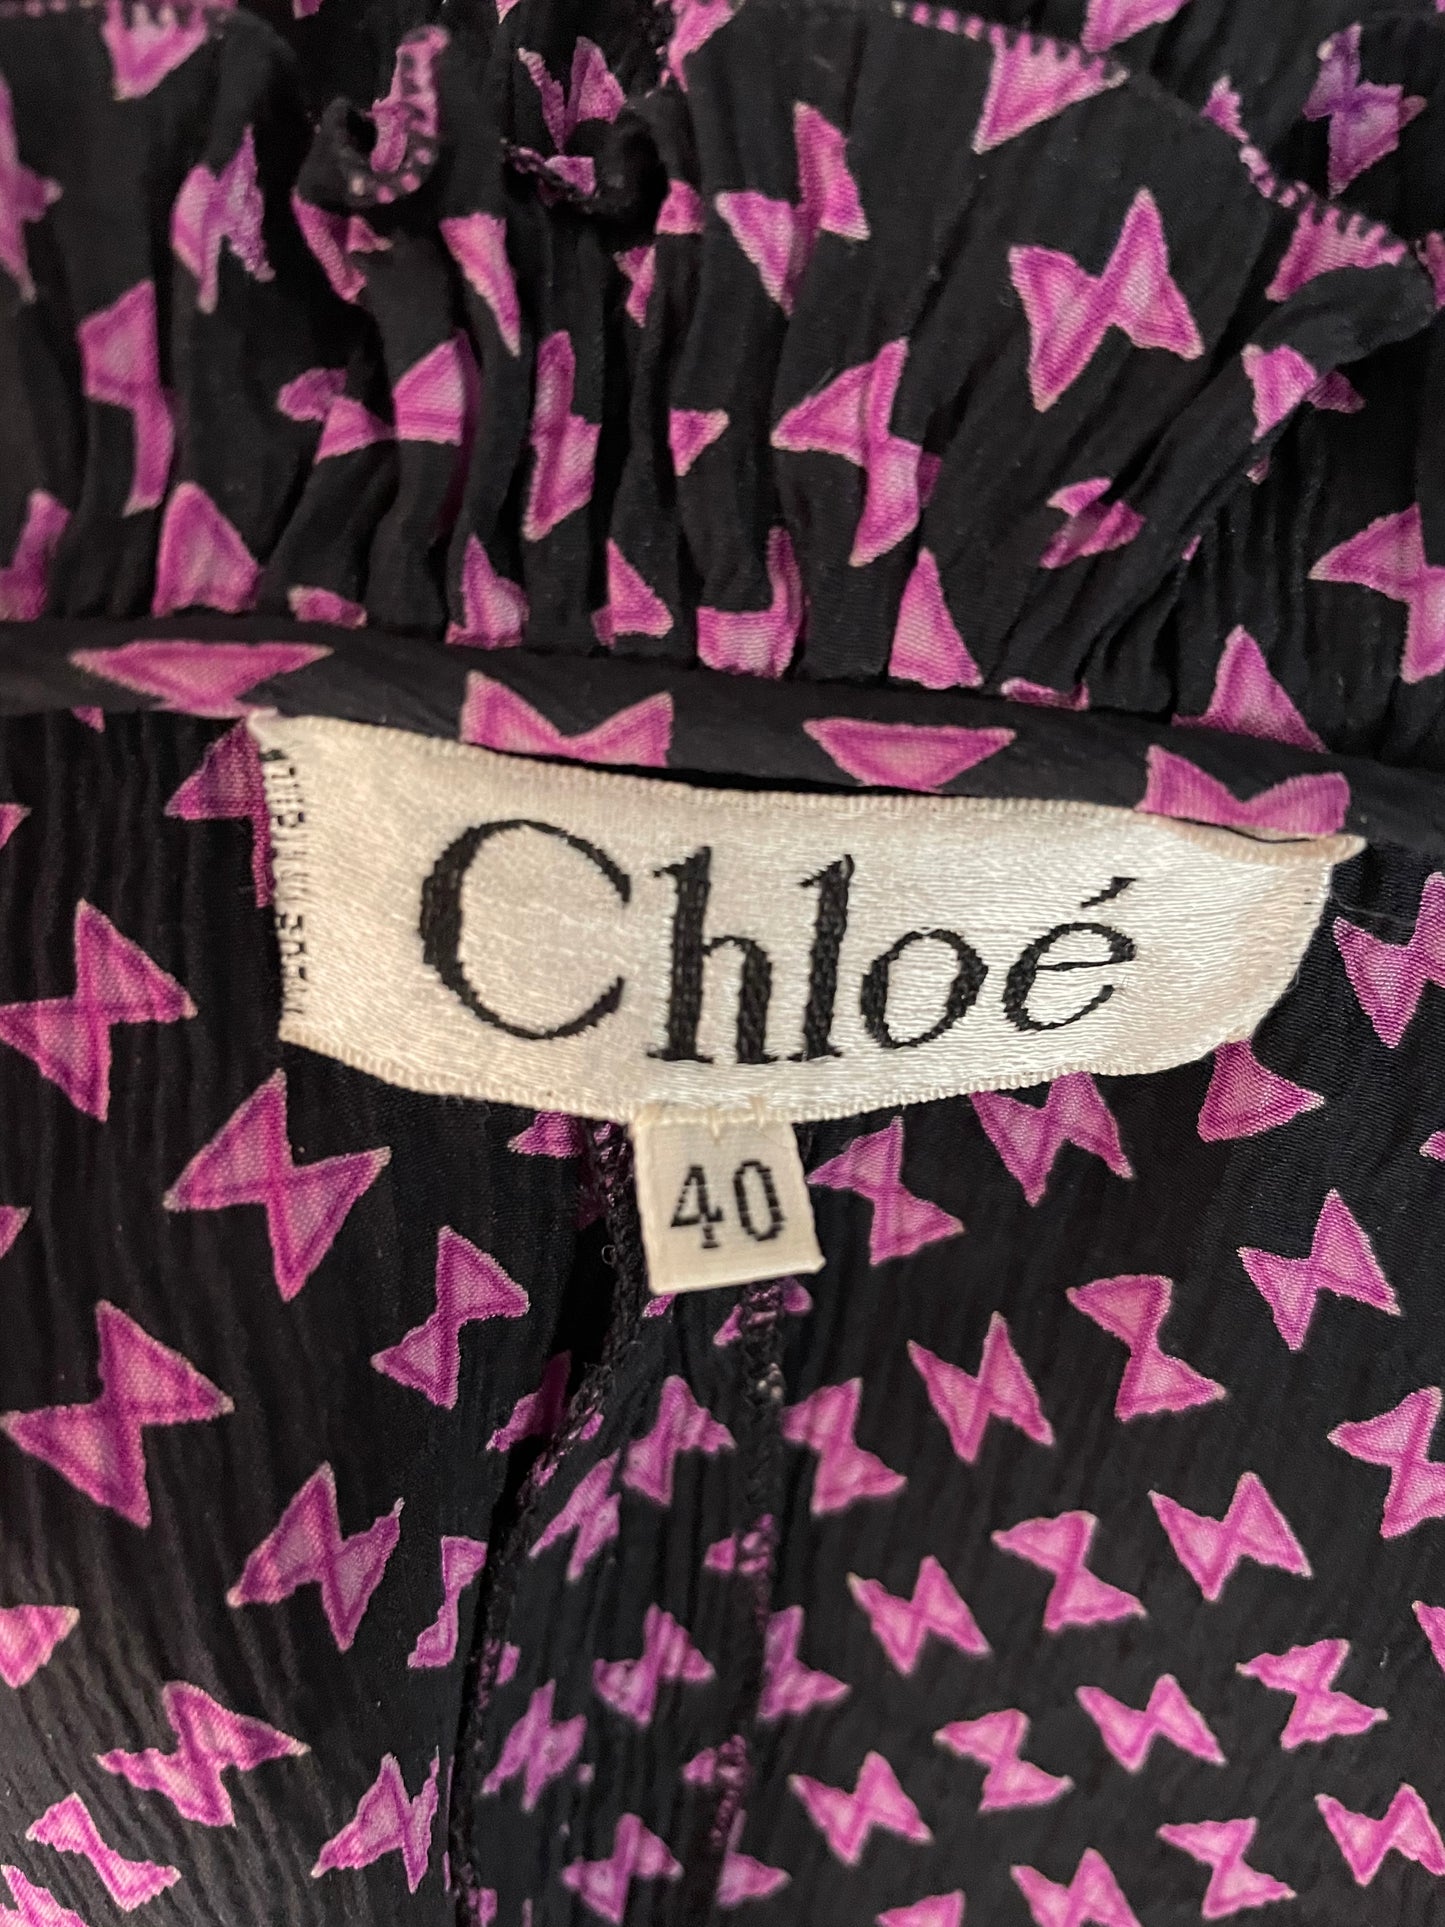 Chloé by Karl Lagerfeld 1970's purple dress